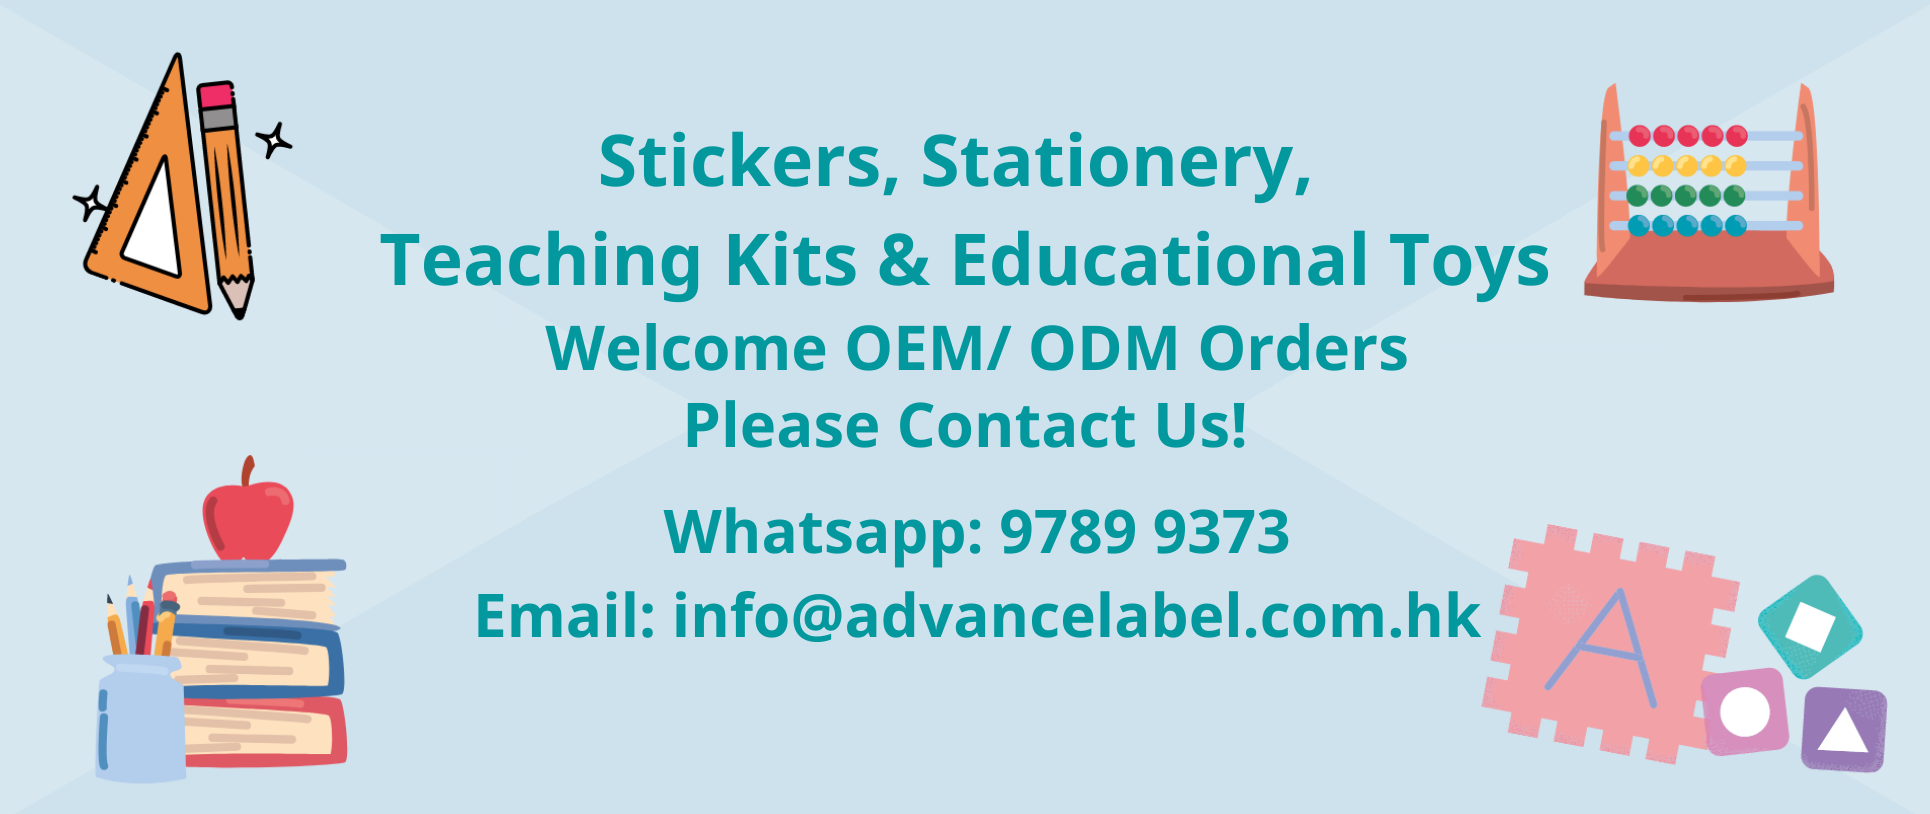 OEM & ODM Stickers, Stationery, Teaching Kits & Educational Toys